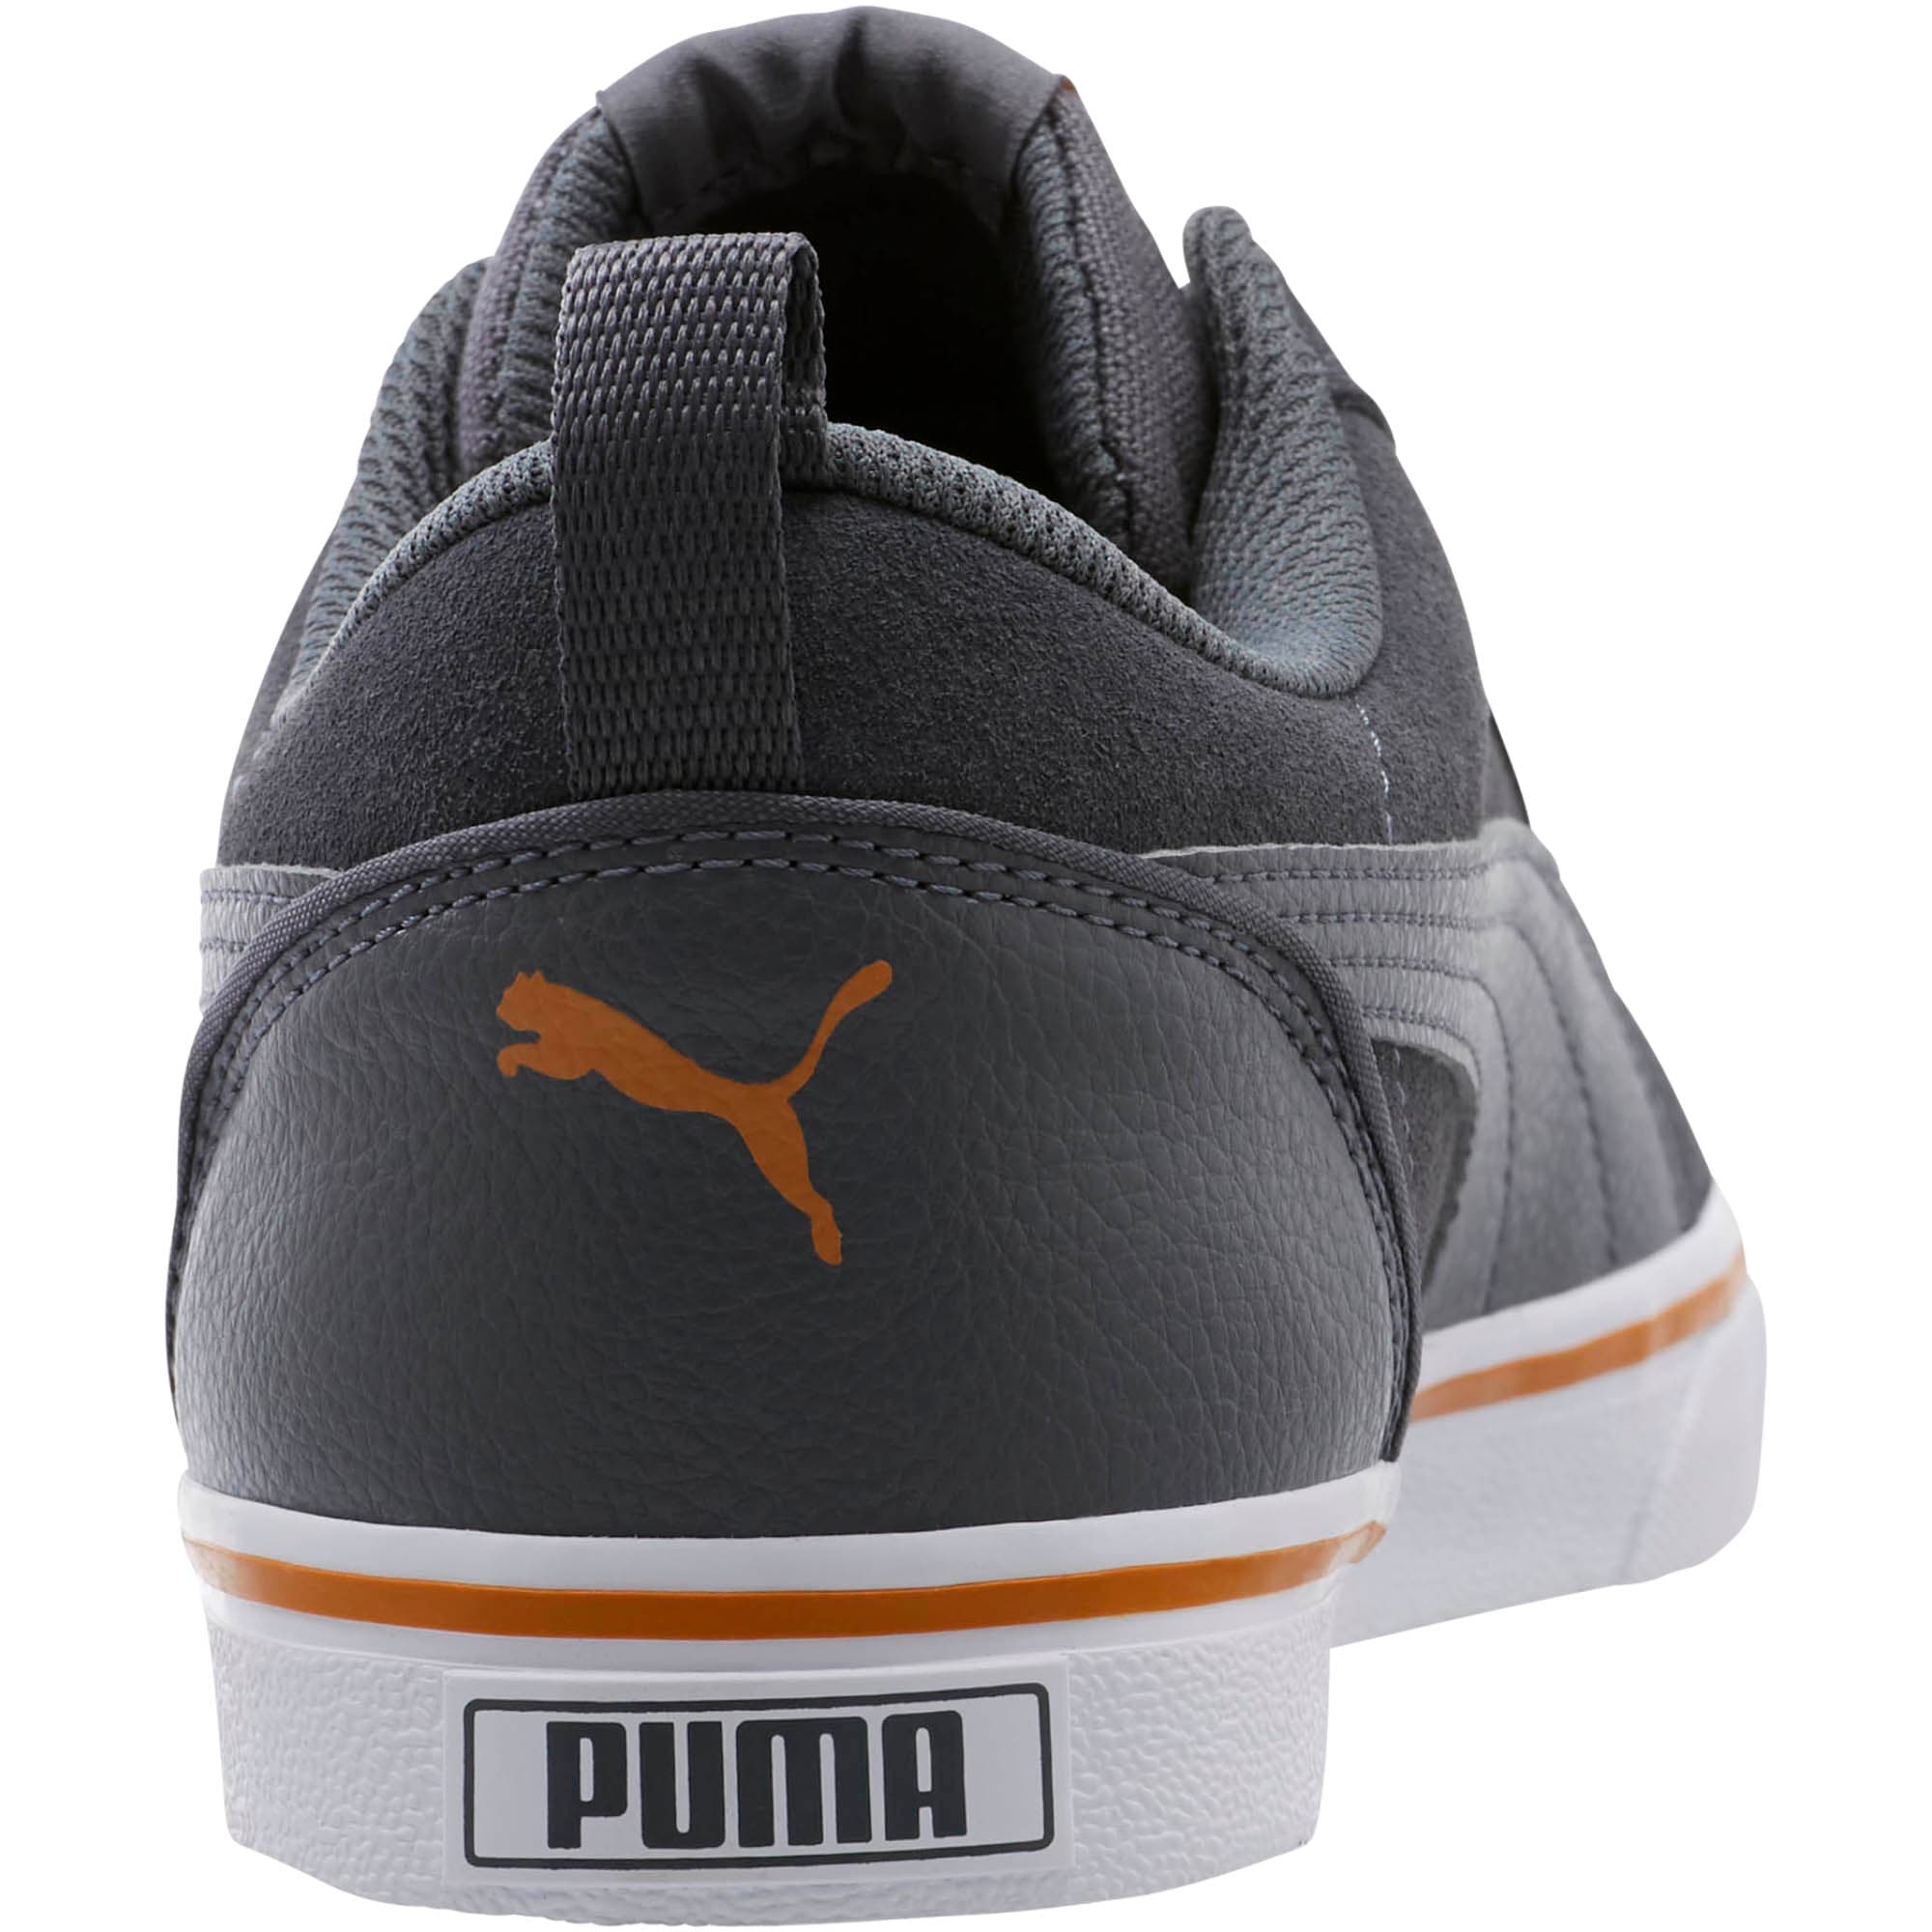 puma bridger men's sneakers